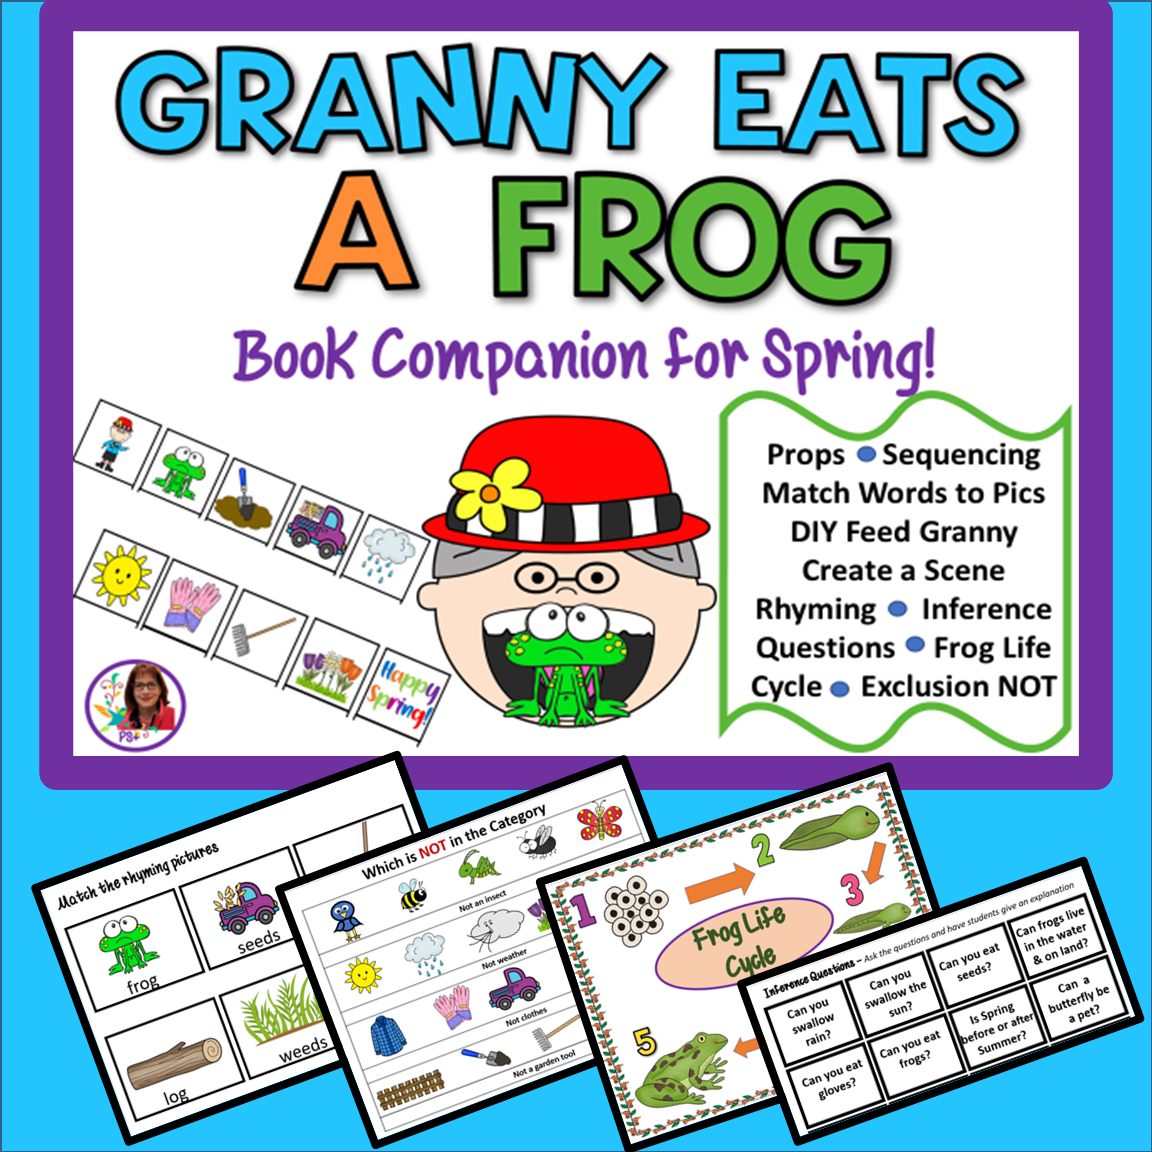 Granny eats Frog cover.png